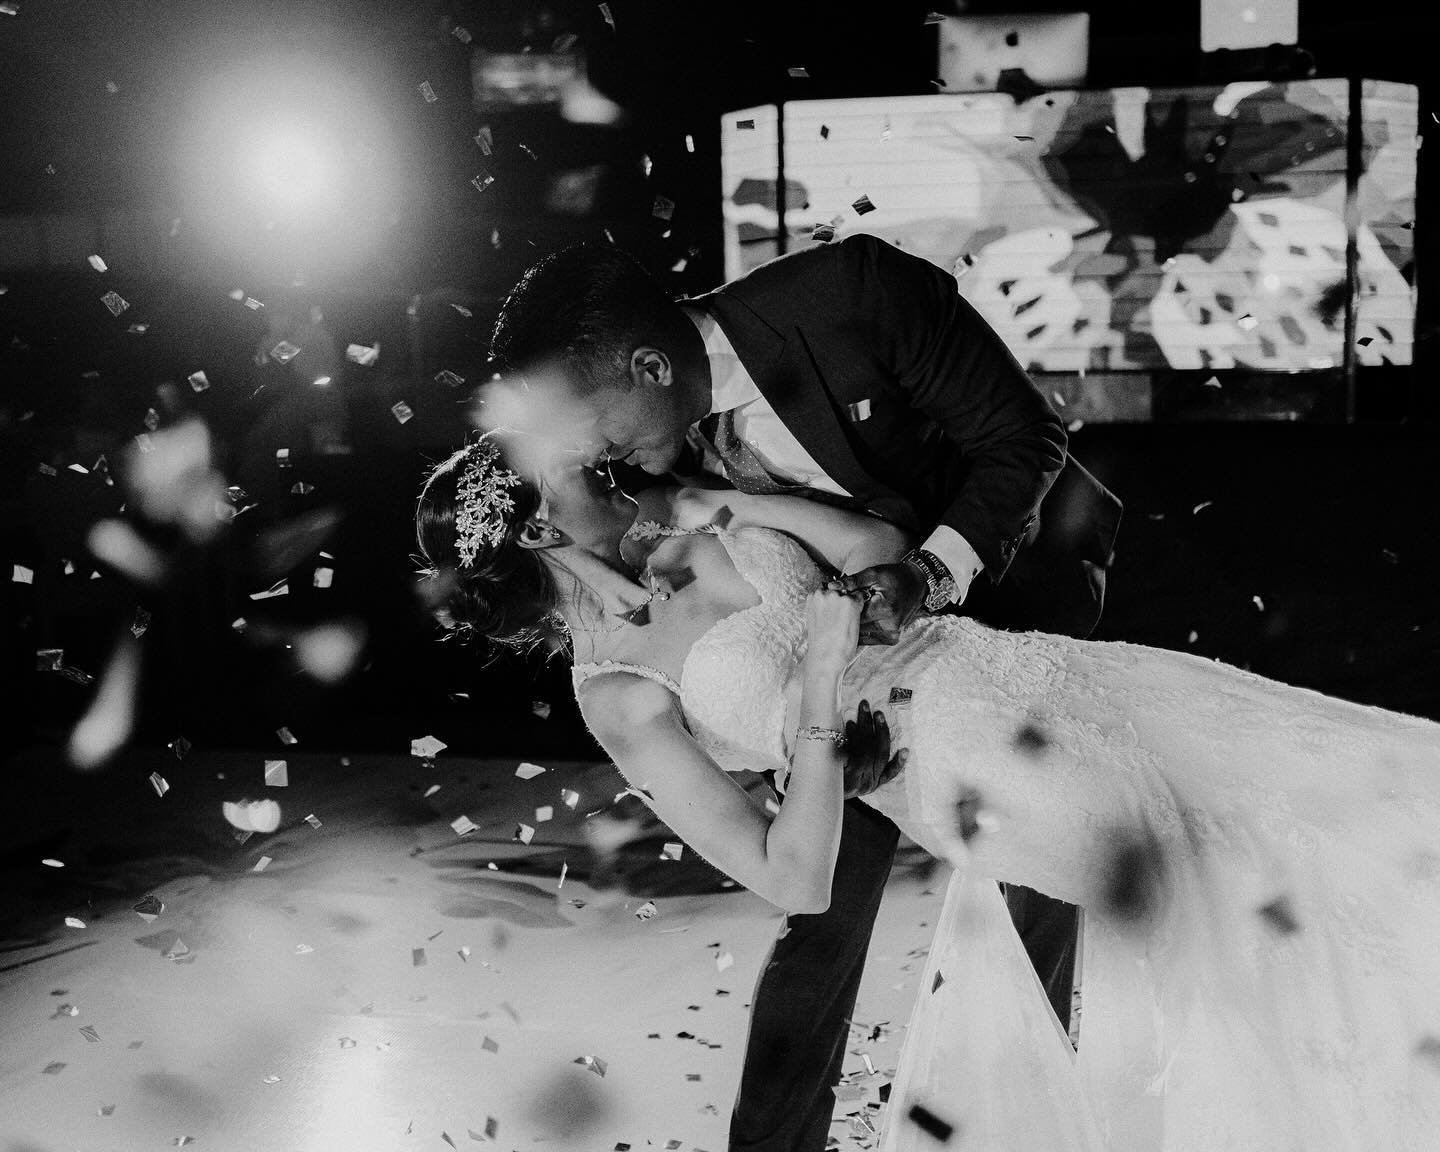 Las bodas son sobre festejar el amor ✨

#bodas #festejo #celebracion #amor #weddings #fotografodebodas #blackandwhitephotography #specialmoments #filmphotography